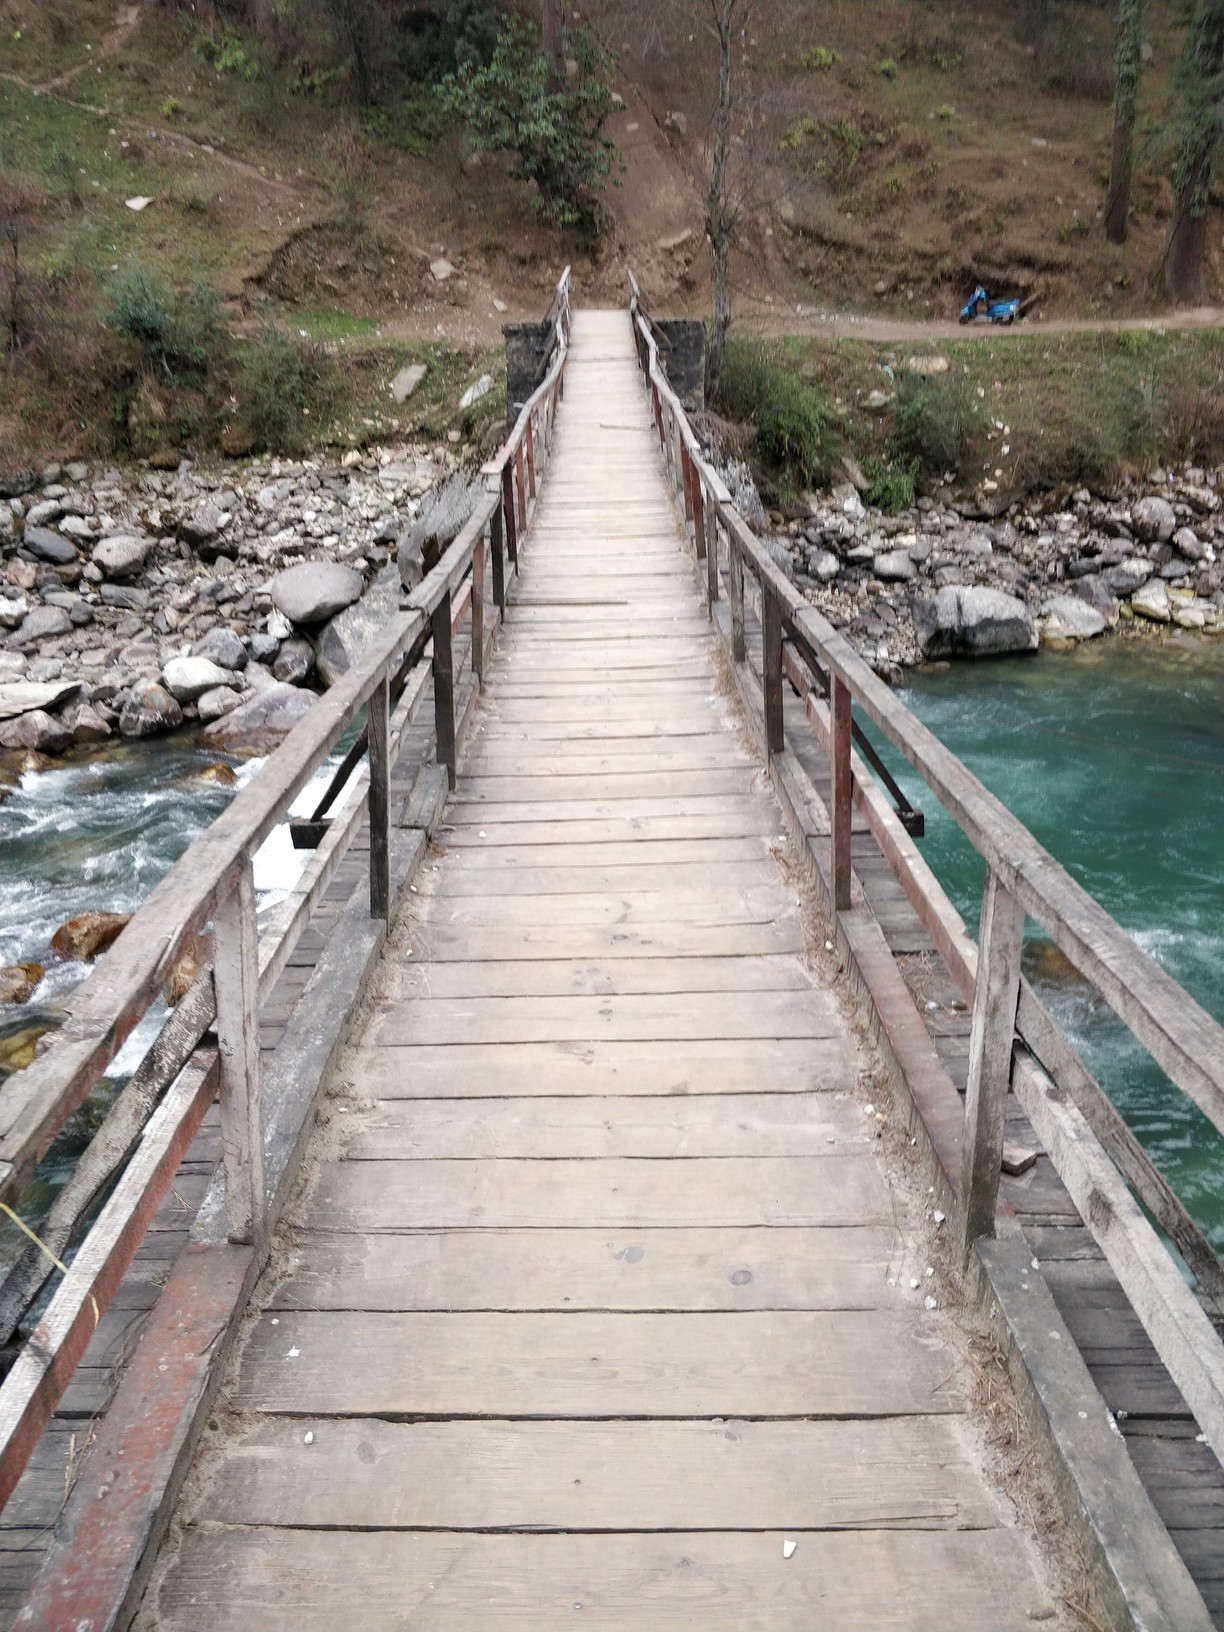 Rasol Pass, Himachal Pradesh, India - A wooden bridge that connects...